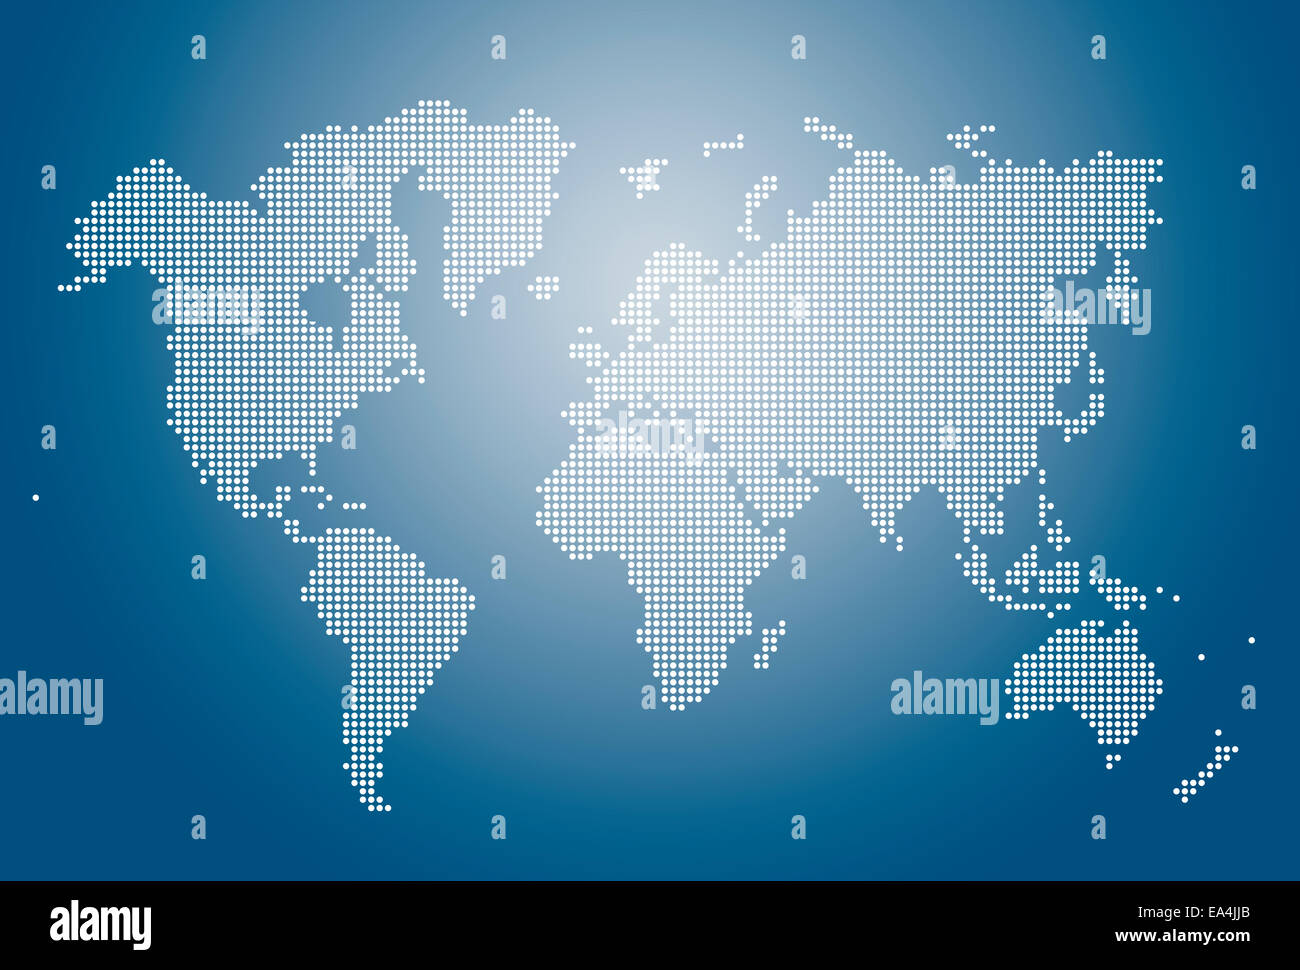 Bild der modernen Welt Karte illustration Stockfoto